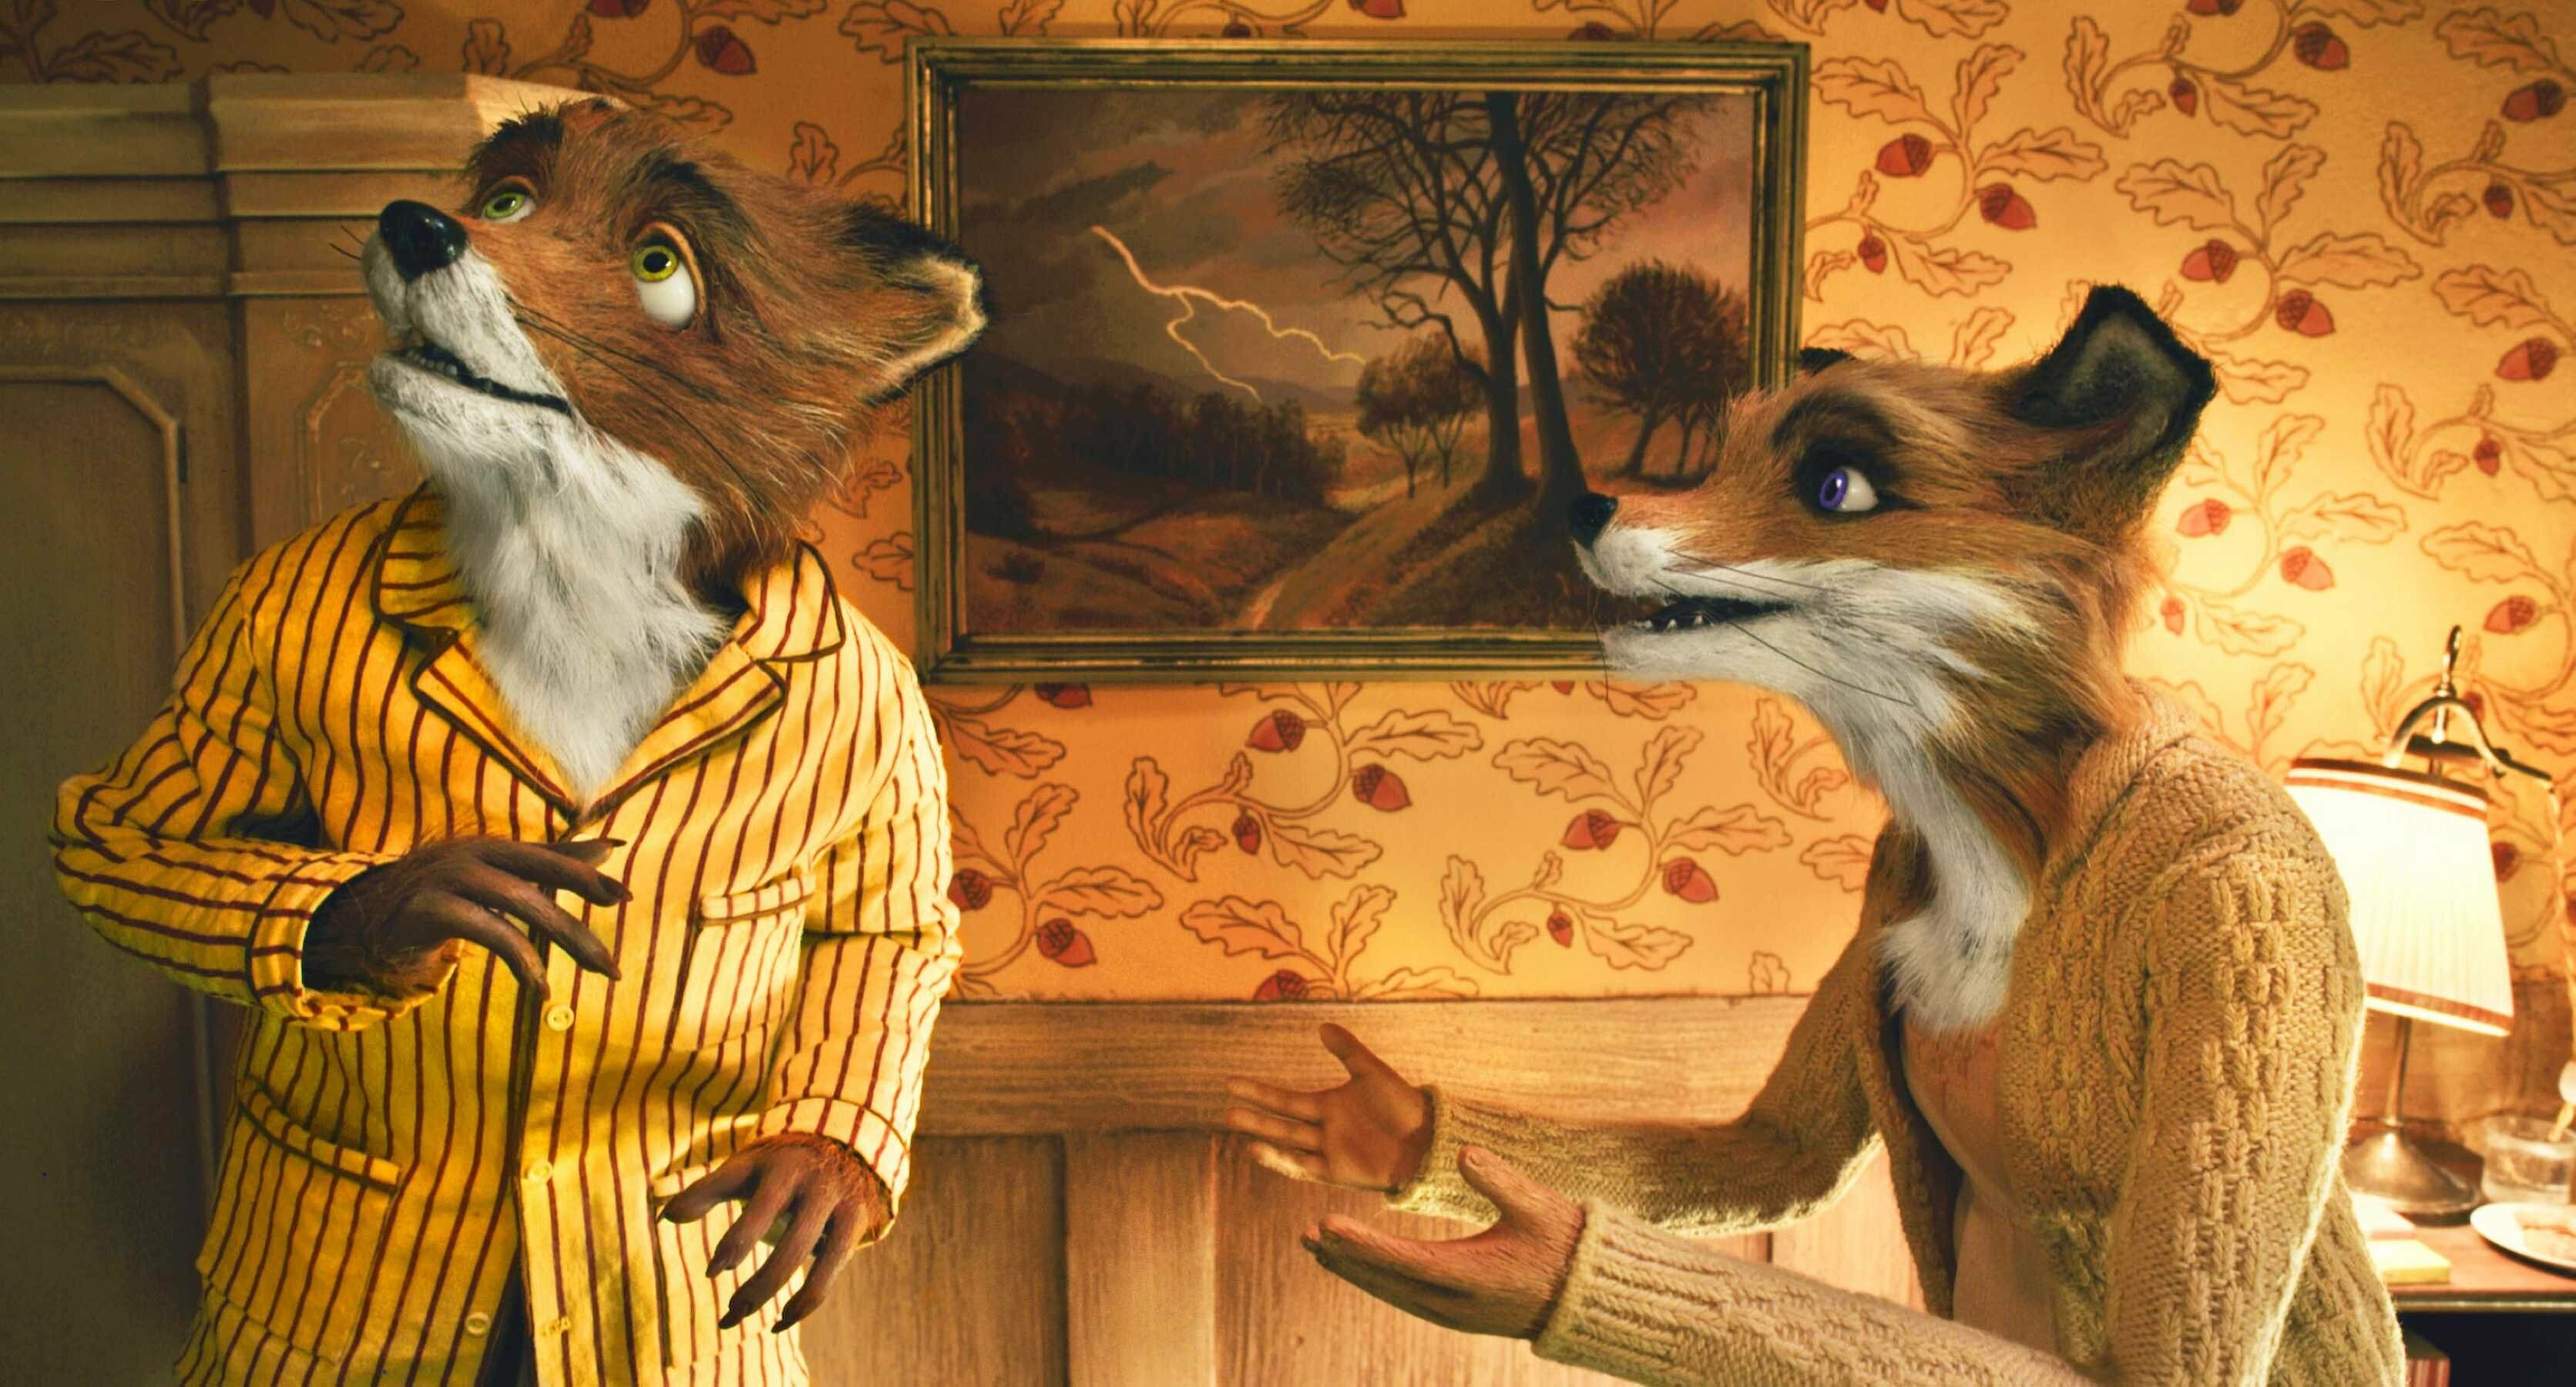 FANTASTIC MR FOX animation comedy family adventure 1mrfox foxes wallpaper   1920x1080  583190  WallpaperUP